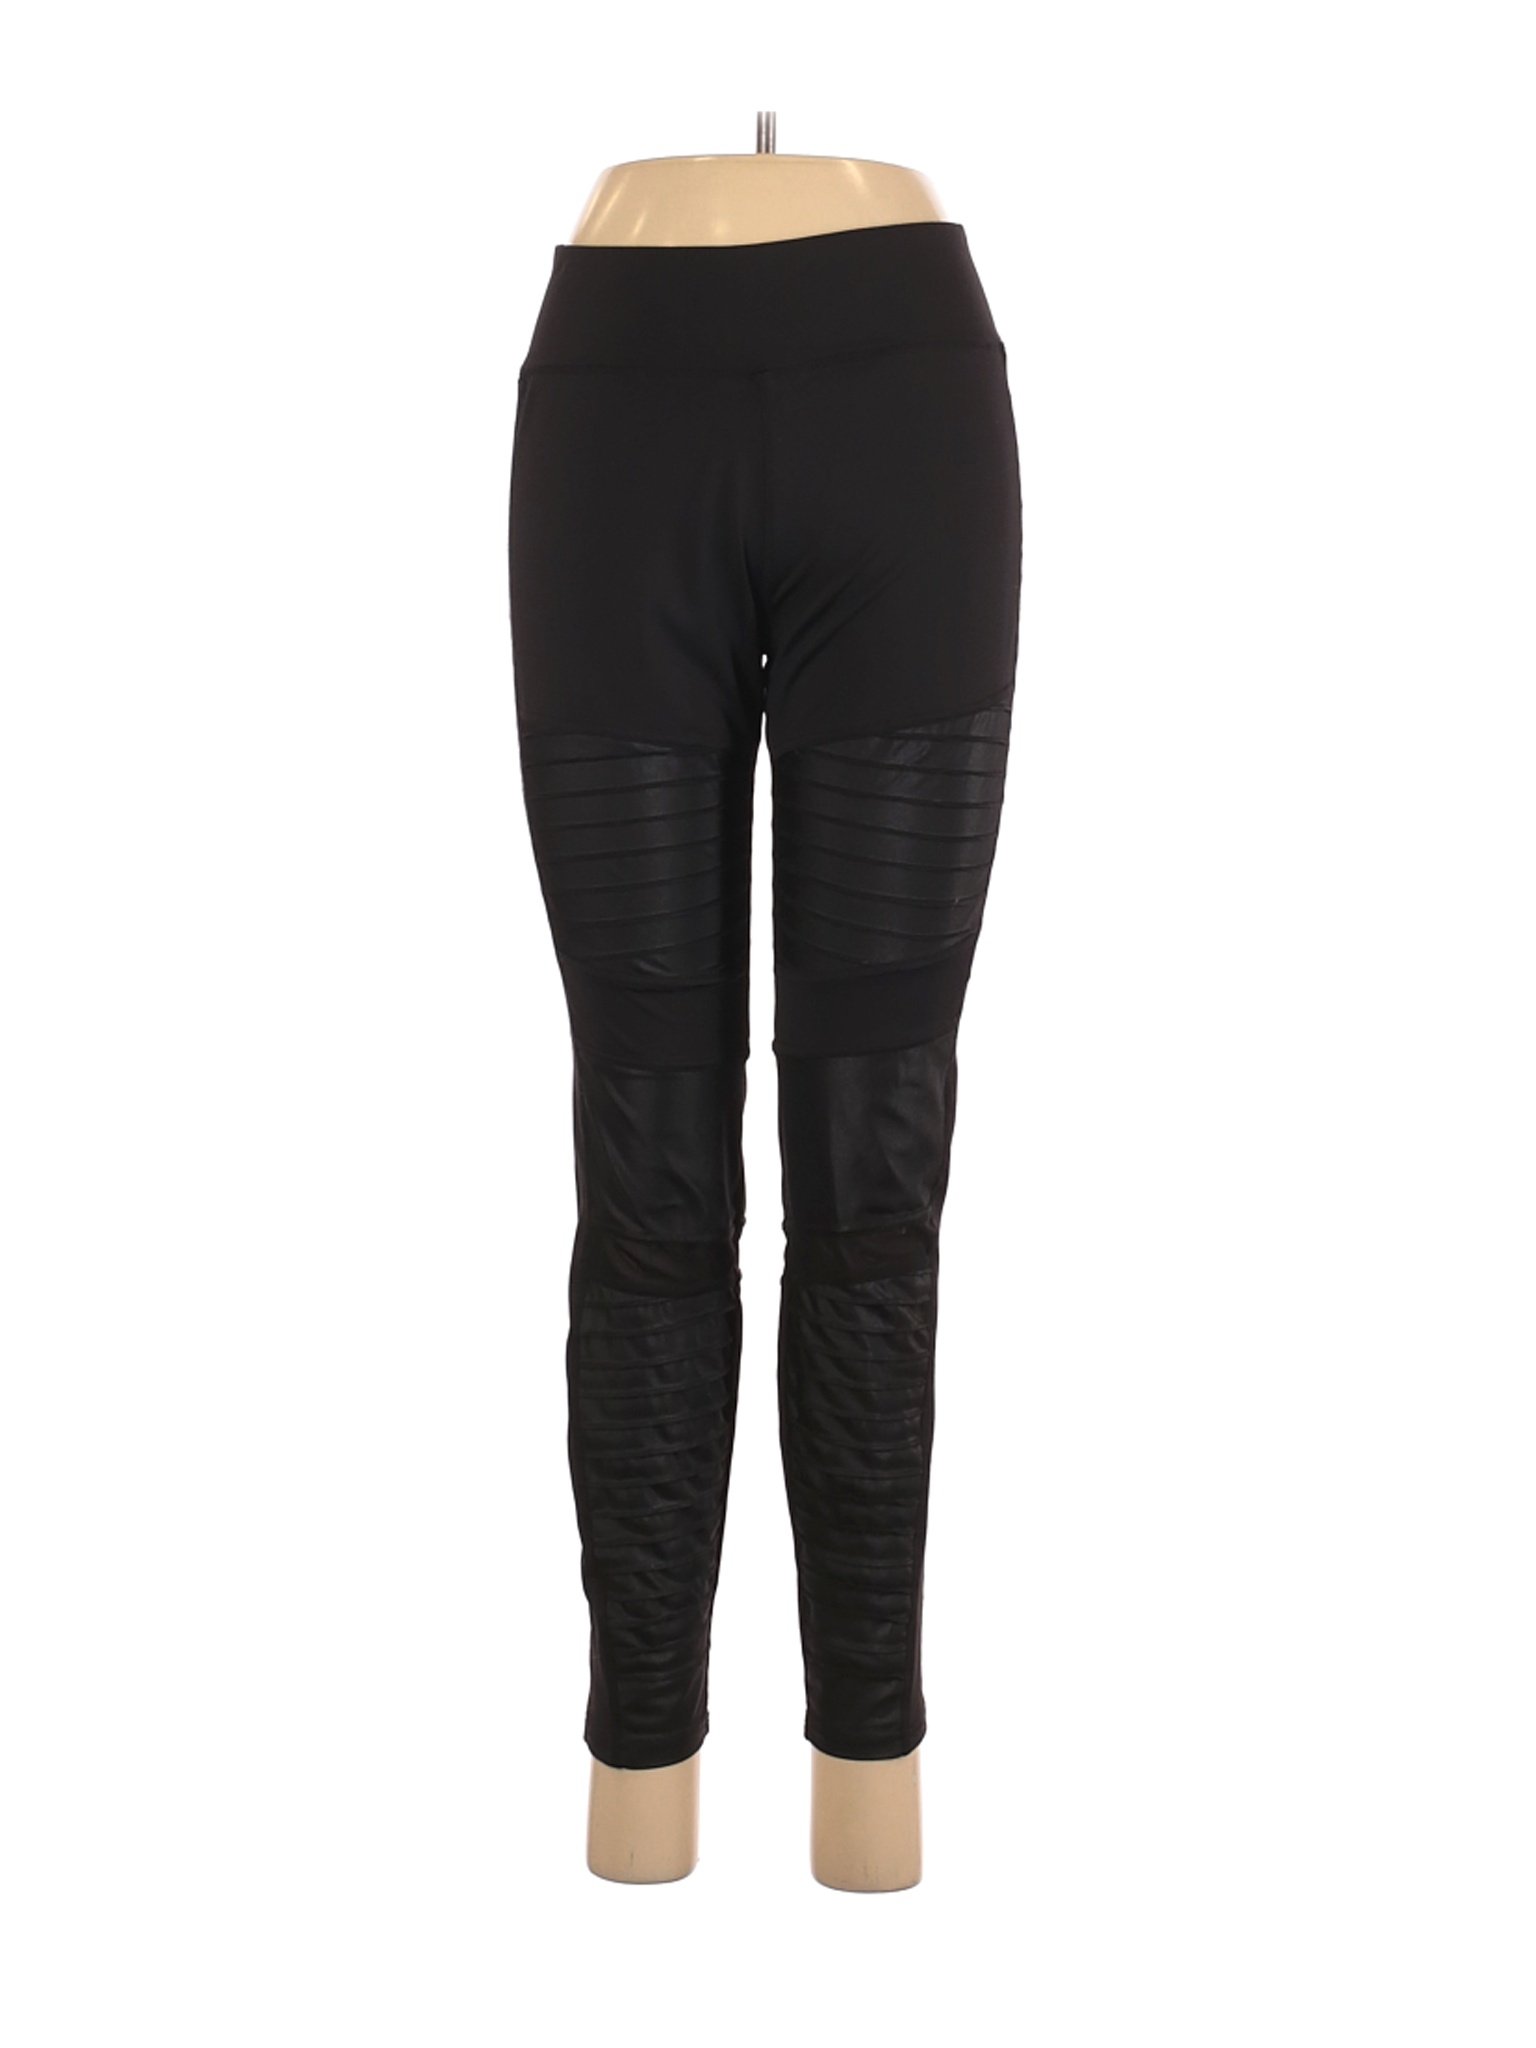 Unbranded Women Black Active Pants M | eBay